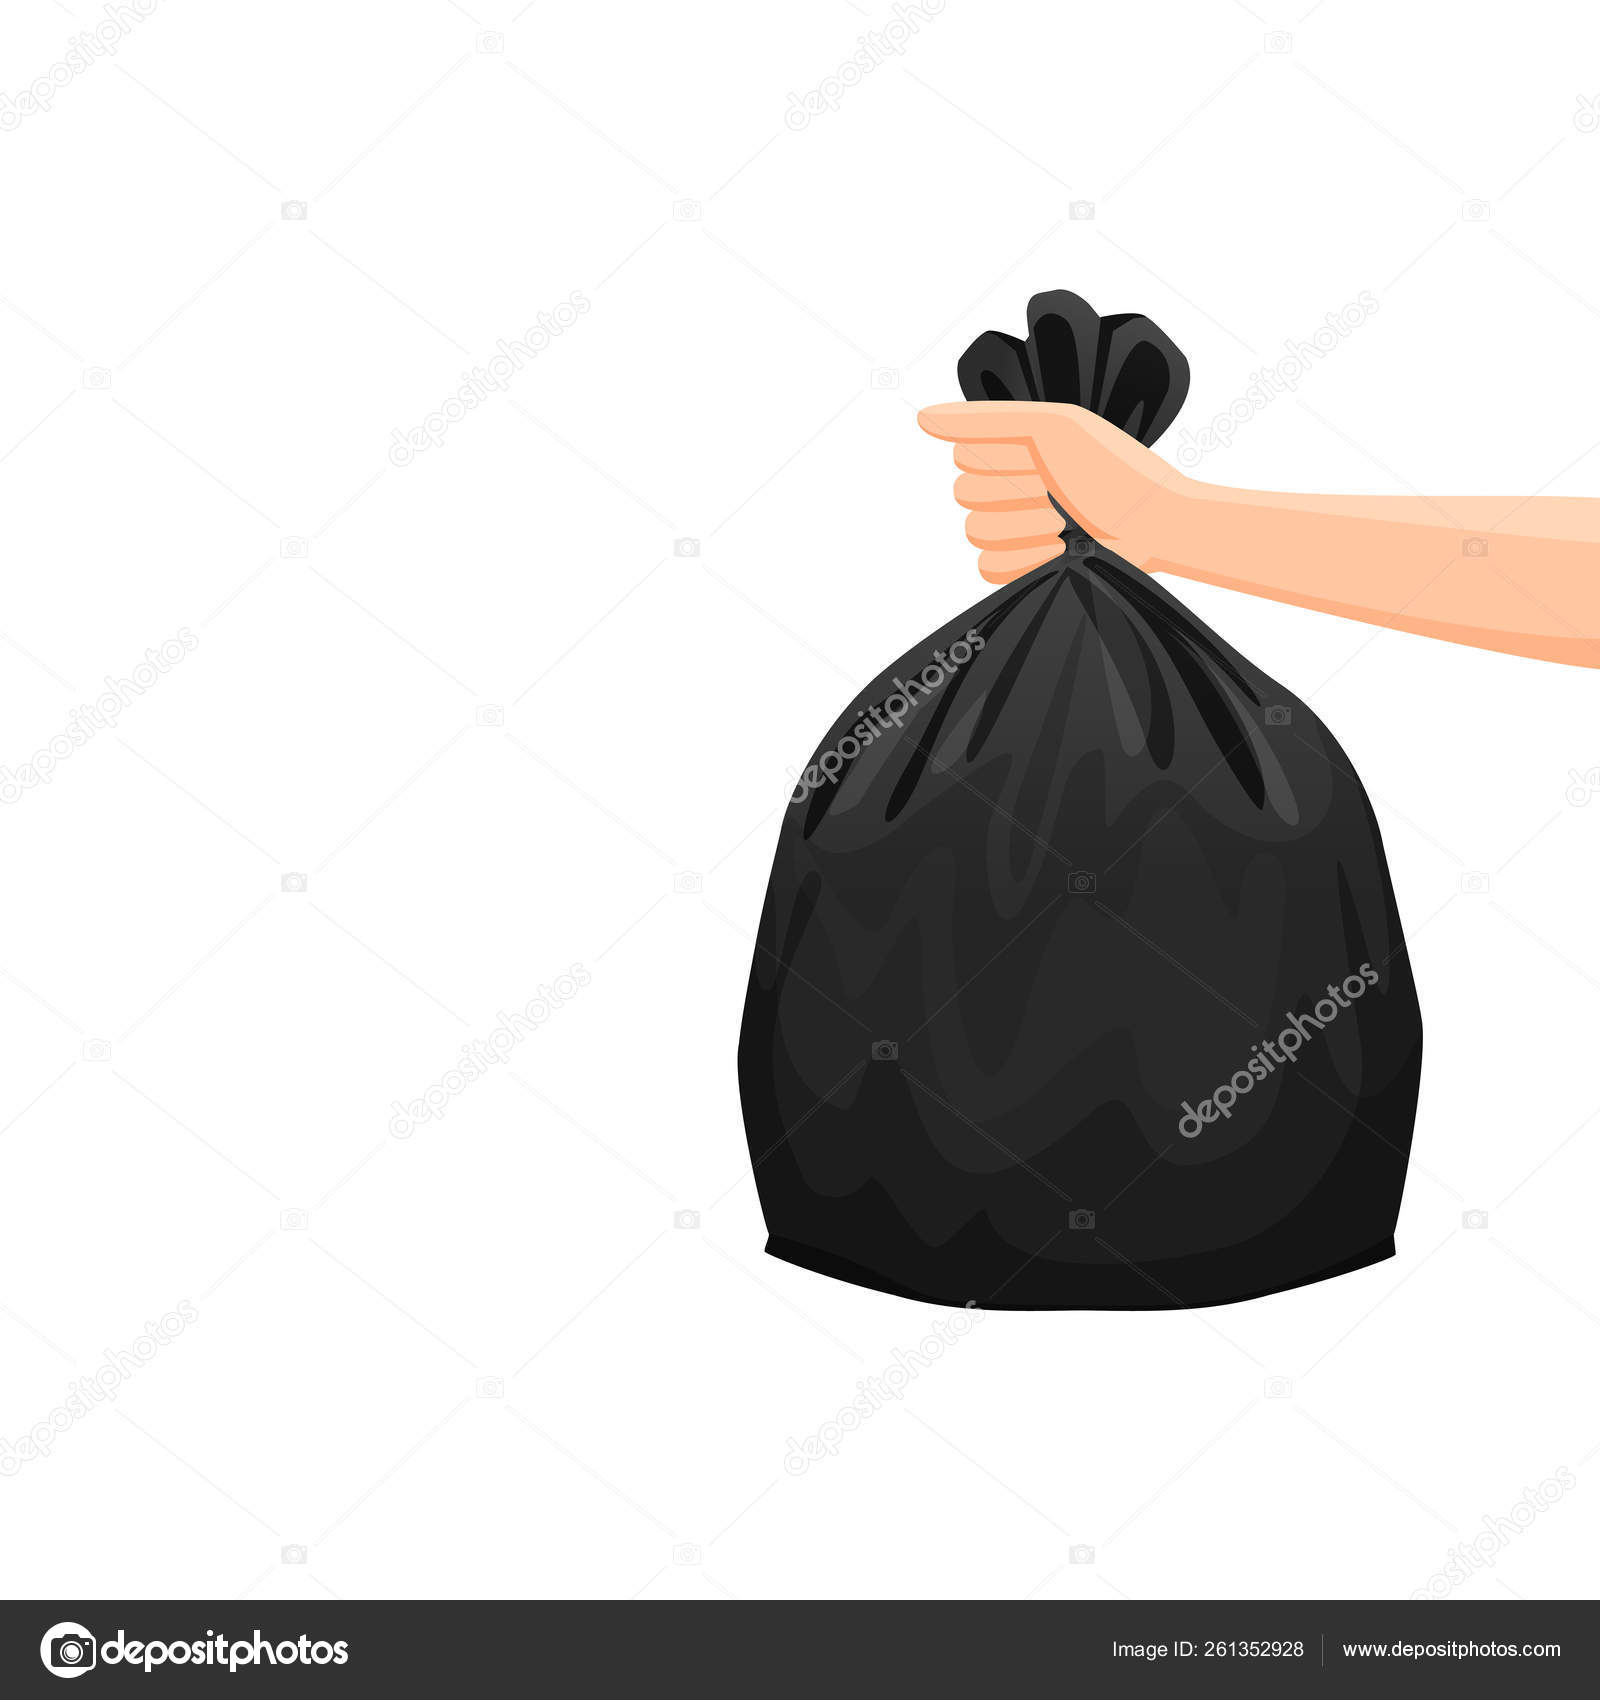 https://st4.depositphotos.com/16940446/26135/v/1600/depositphotos_261352928-stock-illustration-bags-waste-garbage-black-plastic.jpg